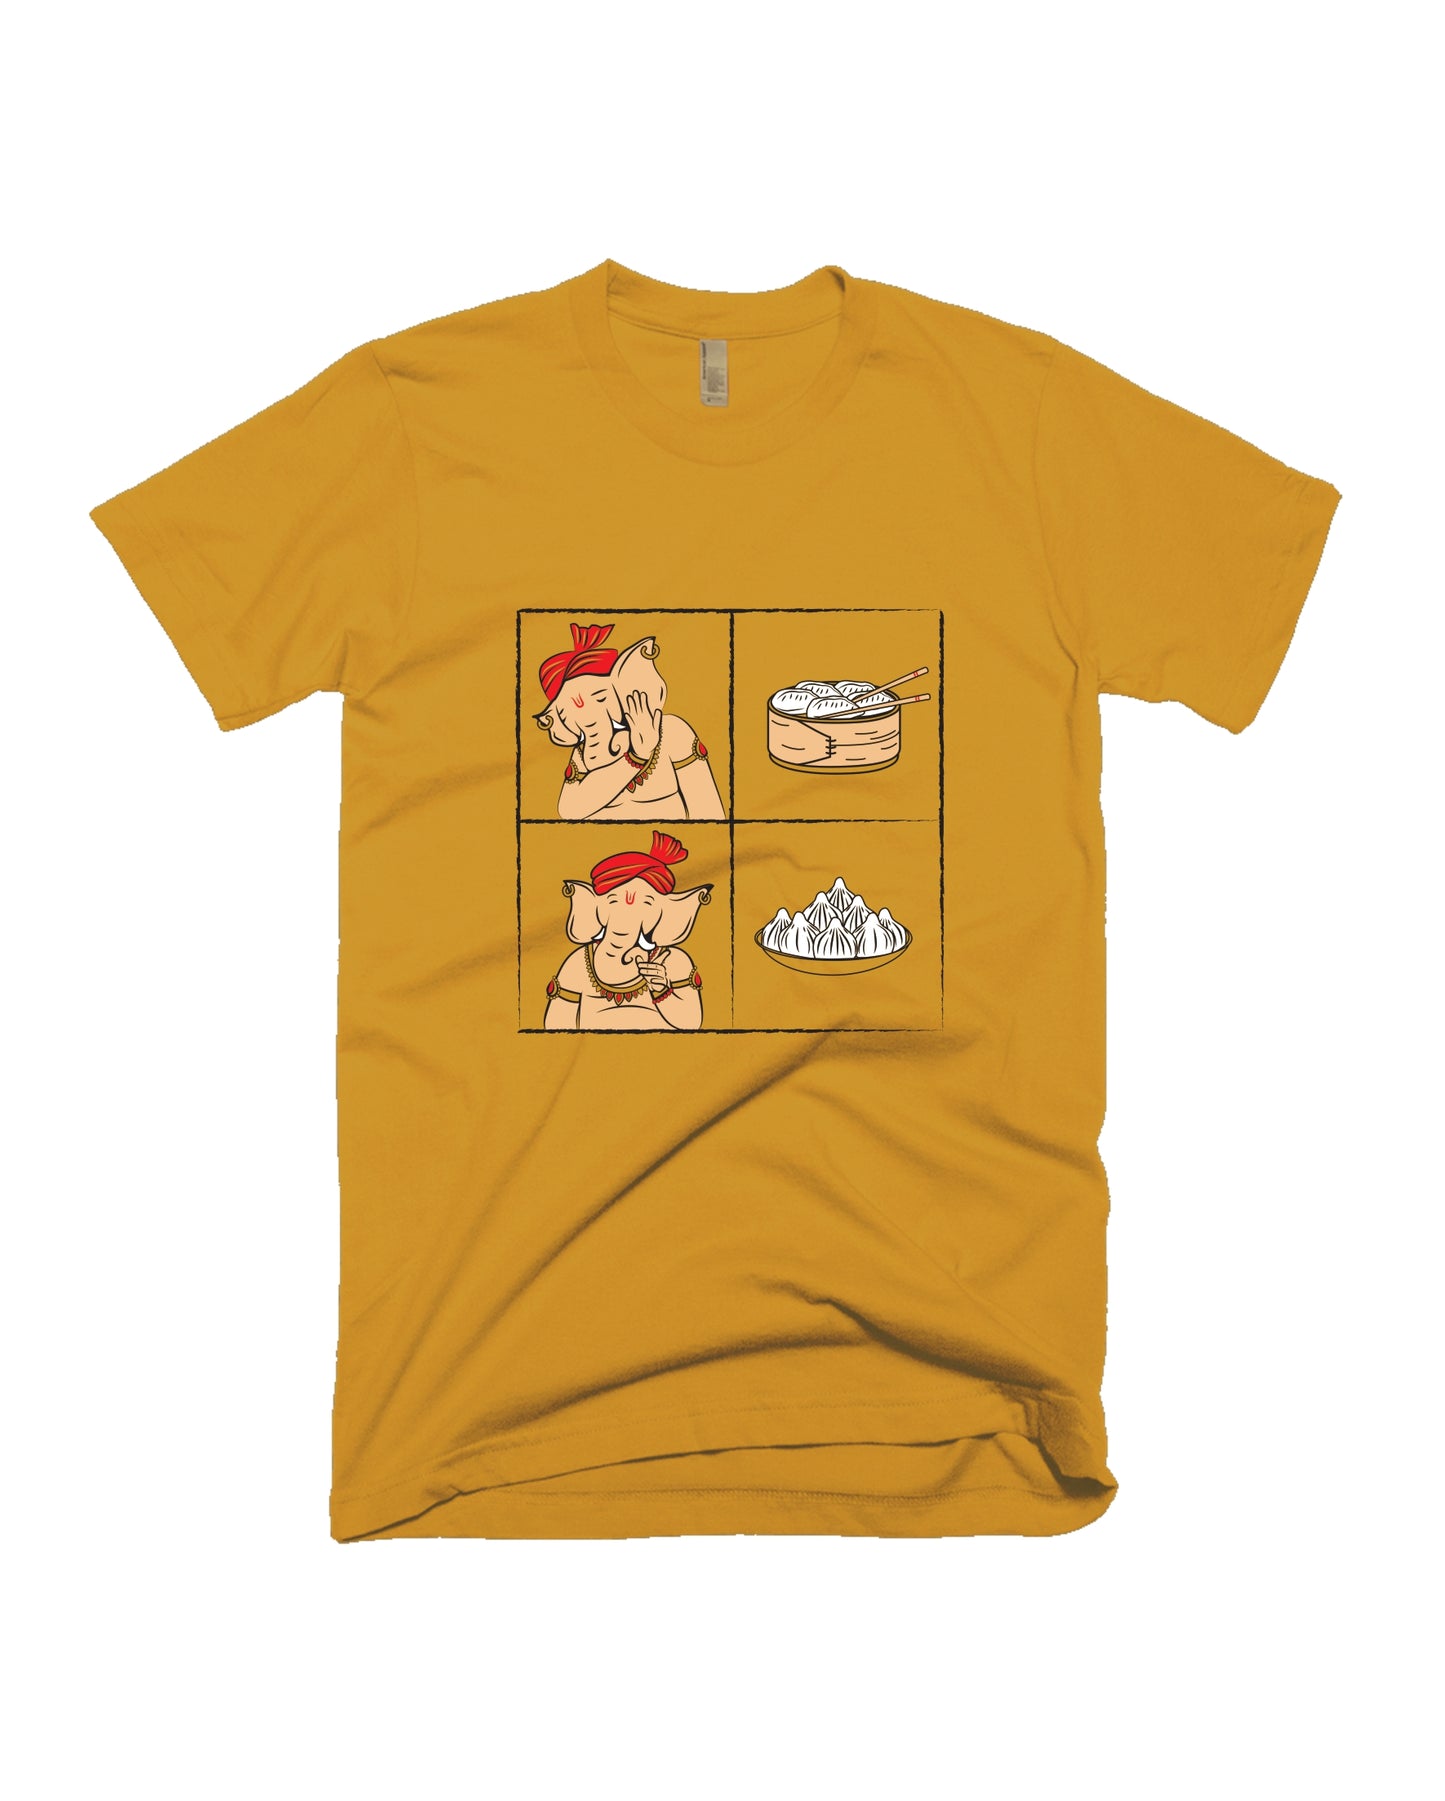 Modak over Momo - Yellow - Unisex Adults T-shirt